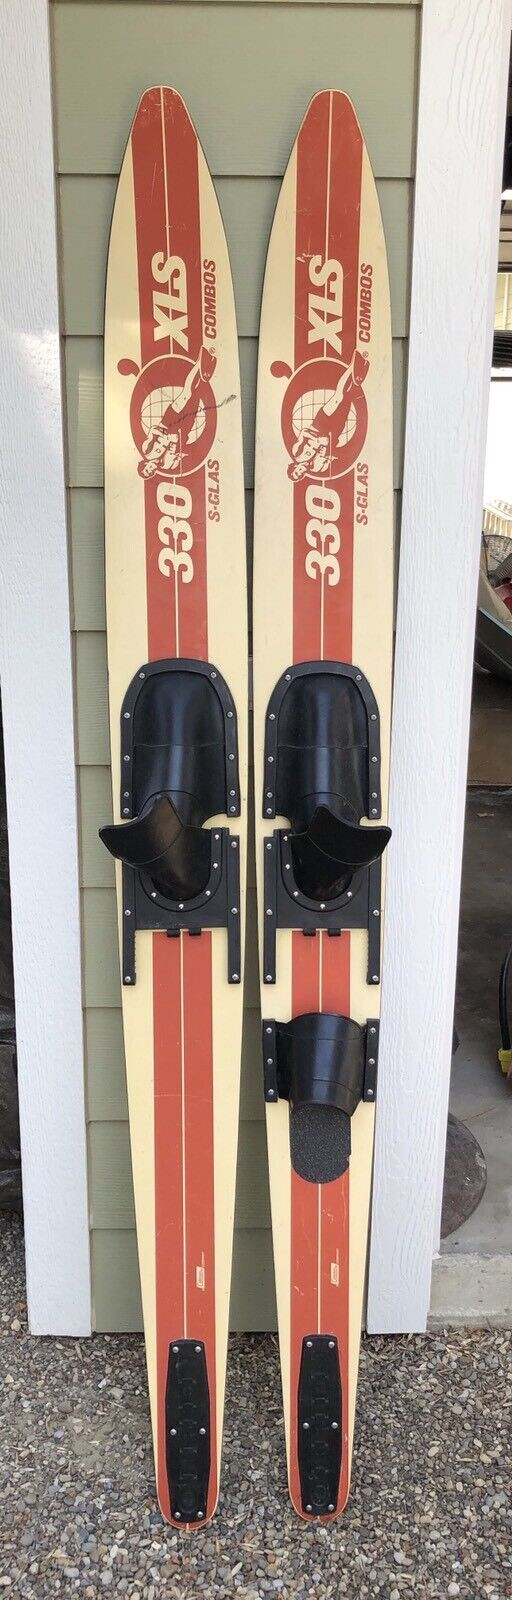 Wooden and fibreglass skis in Ski in Lethbridge - Image 2